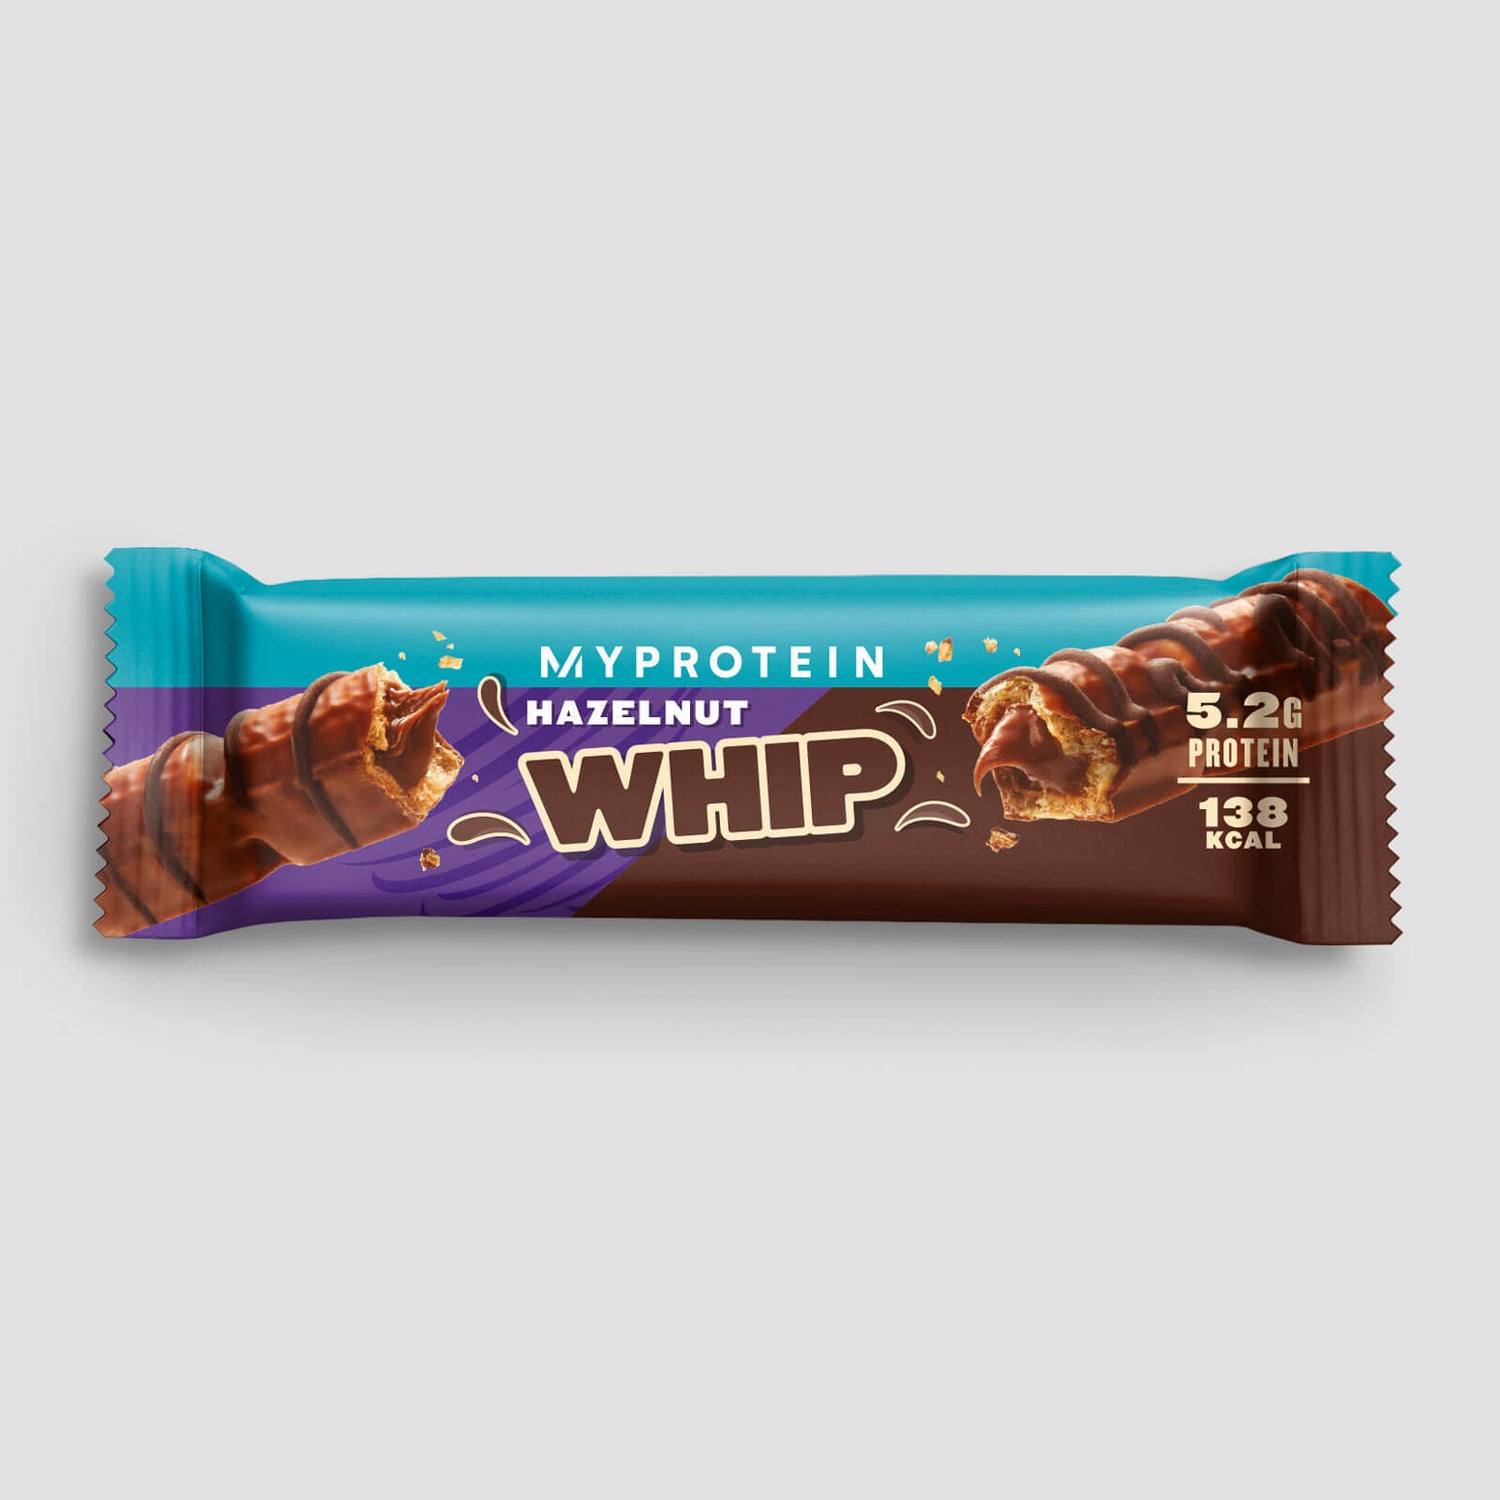 Myprotein Hazelnut Whip (Sample) - 24g - Молочный шоколад